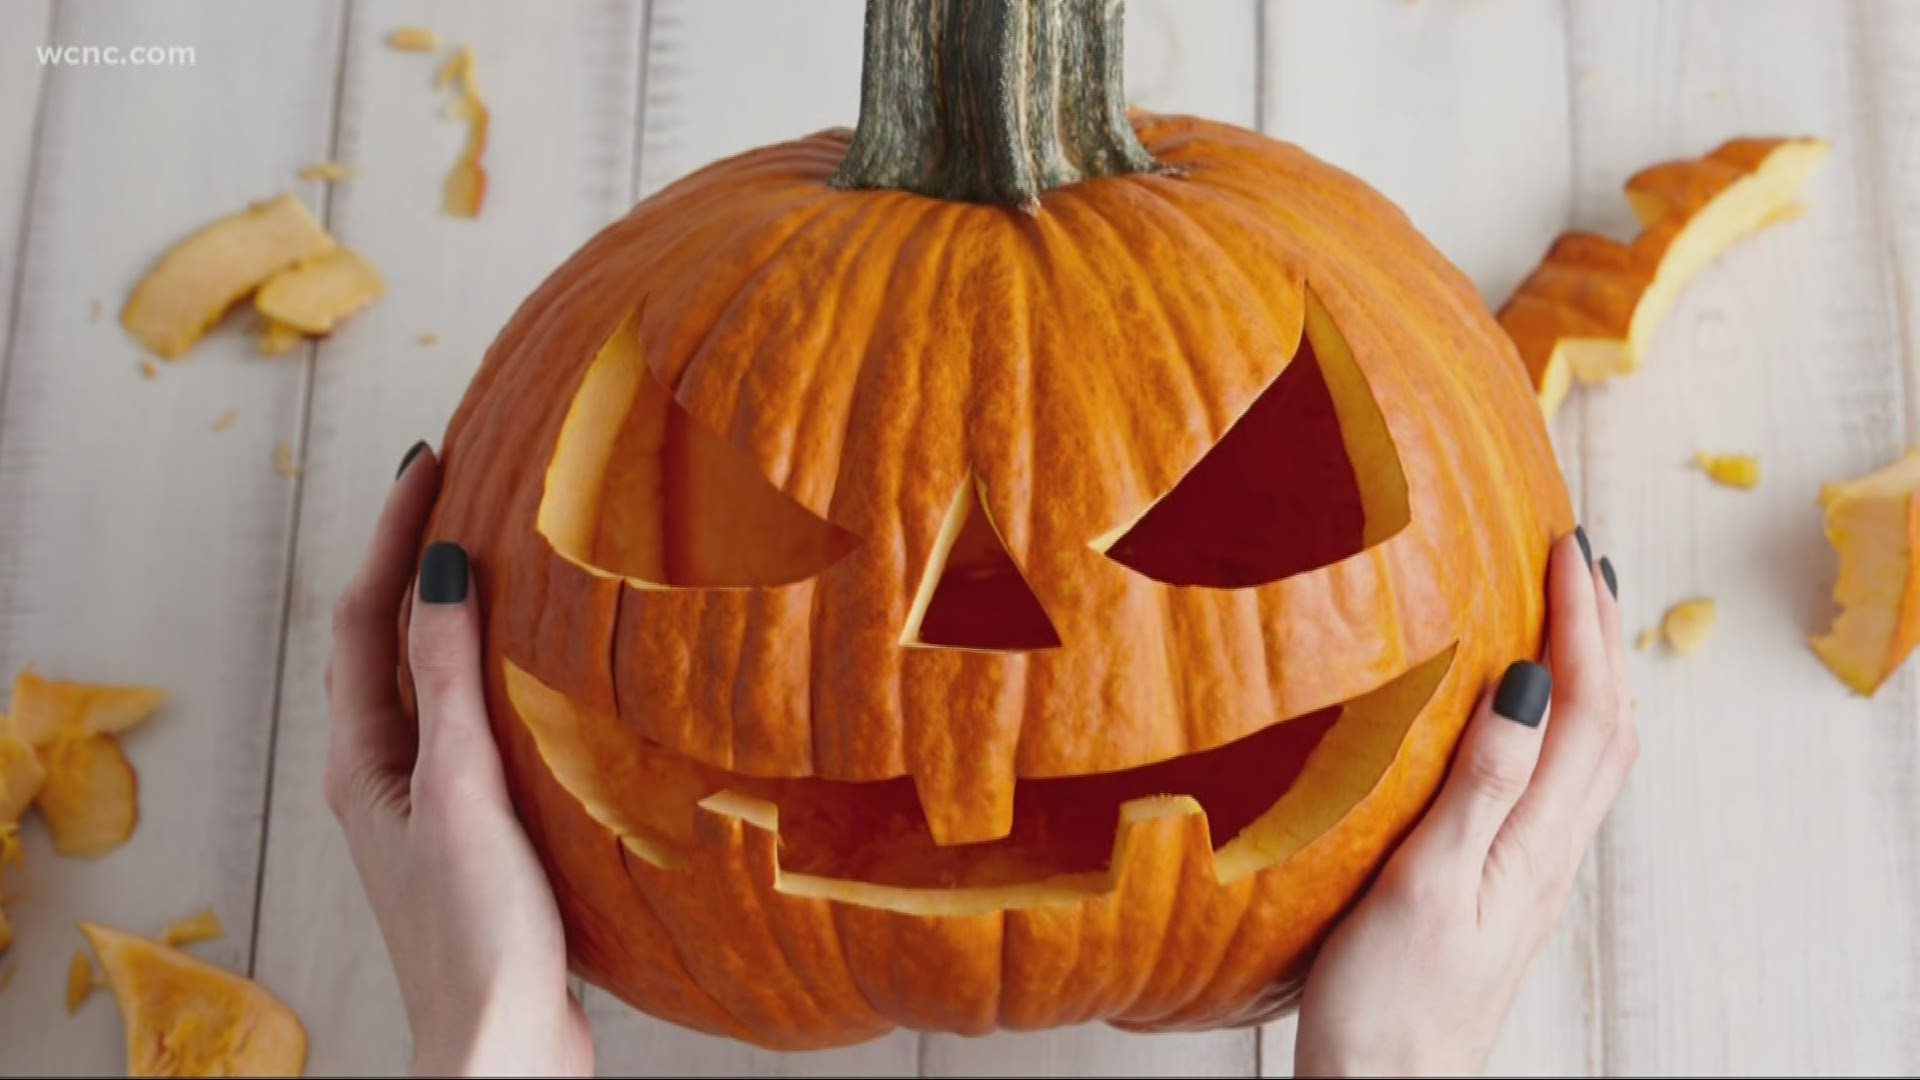 Simple tips to keep carved Halloween pumpkins fresh | wcnc.com